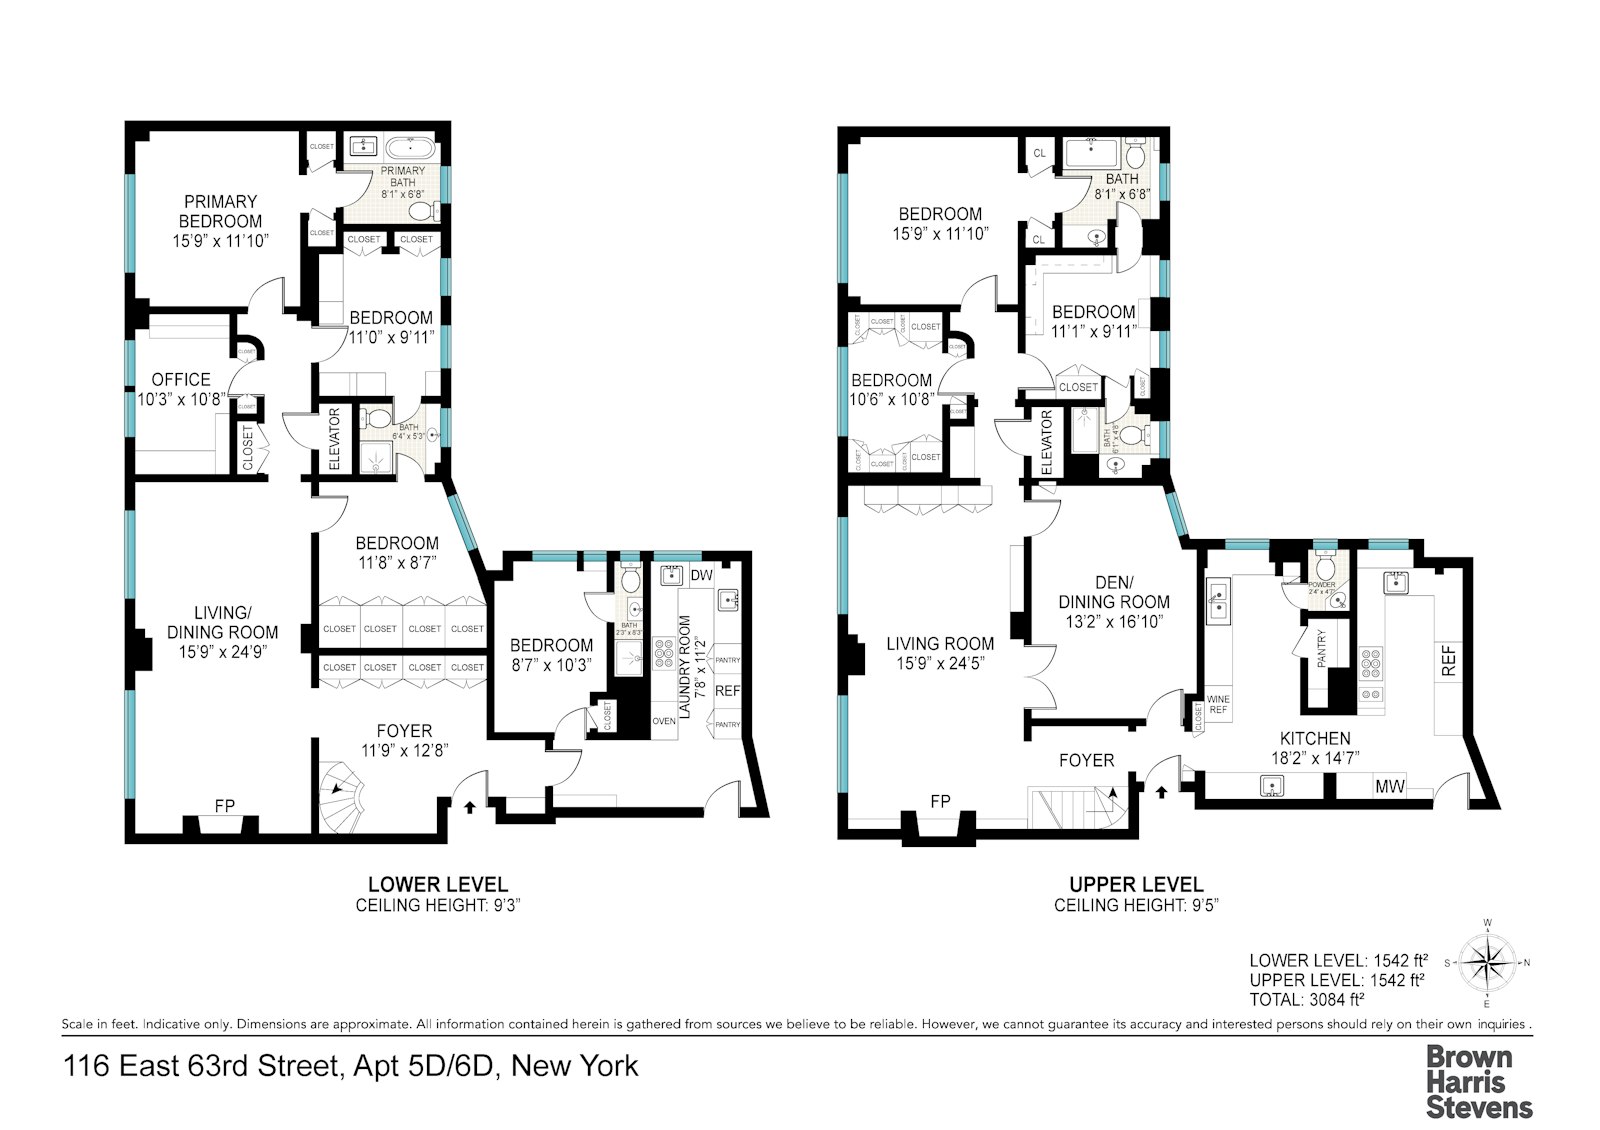 Floorplan for 116 East 63rd Street, 5D/6D